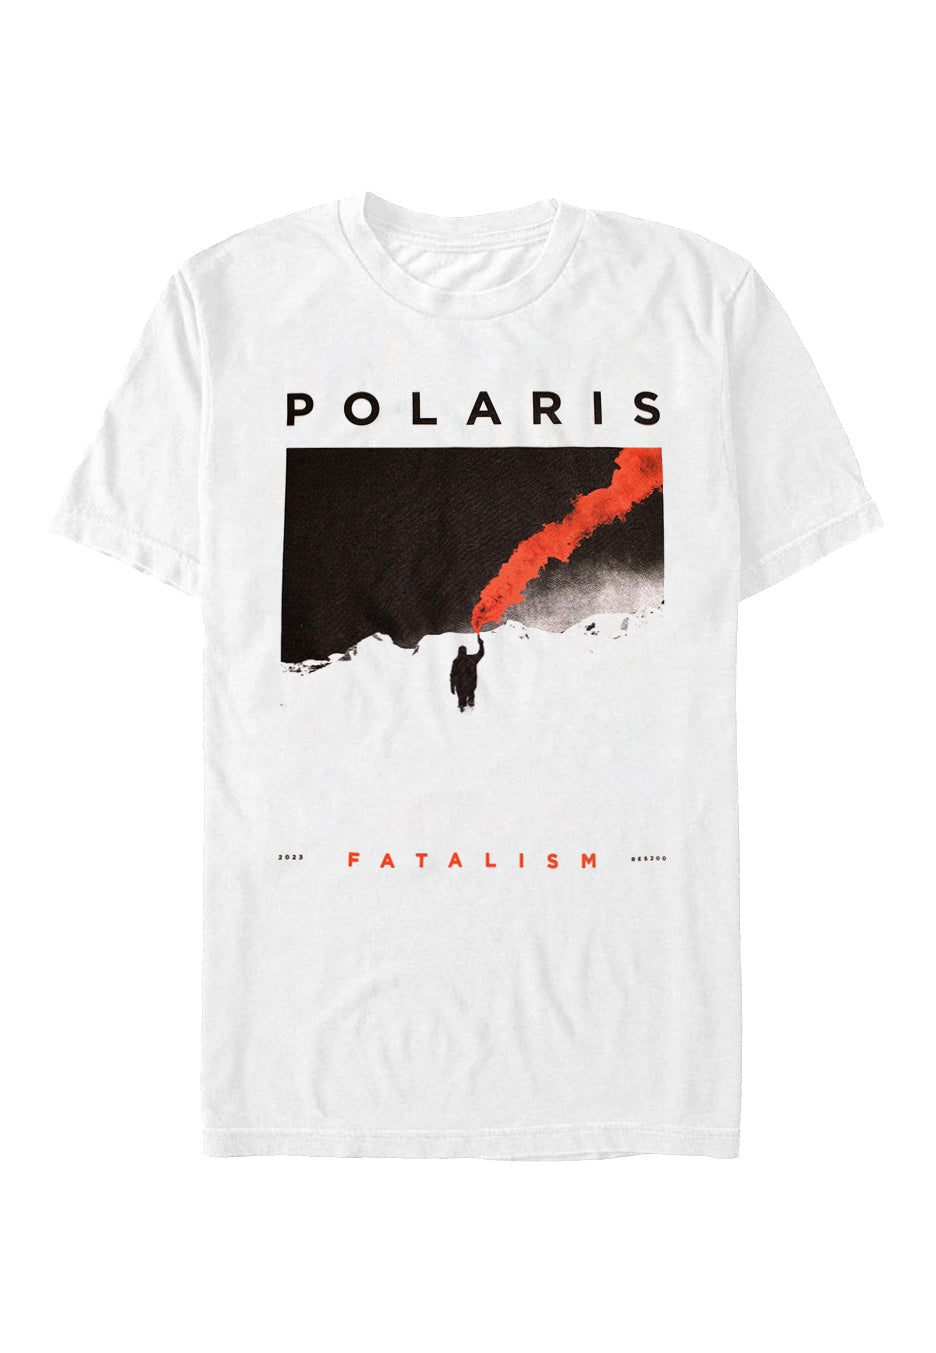 Polaris - Fatalism White - T-Shirt